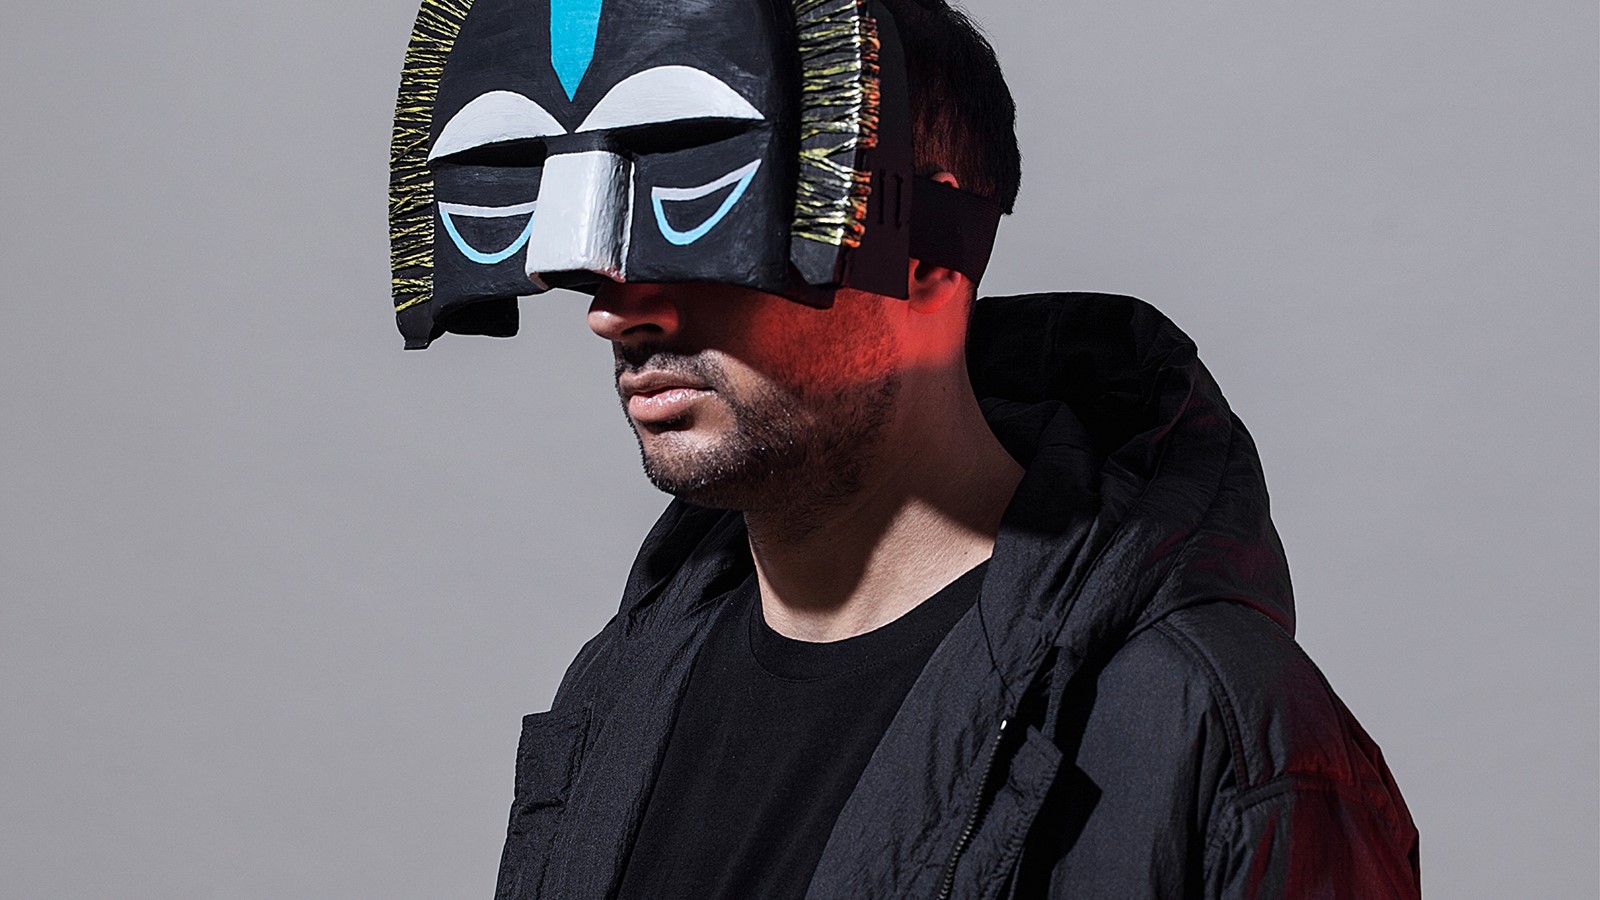 SBTRKT: the artist behind the mask